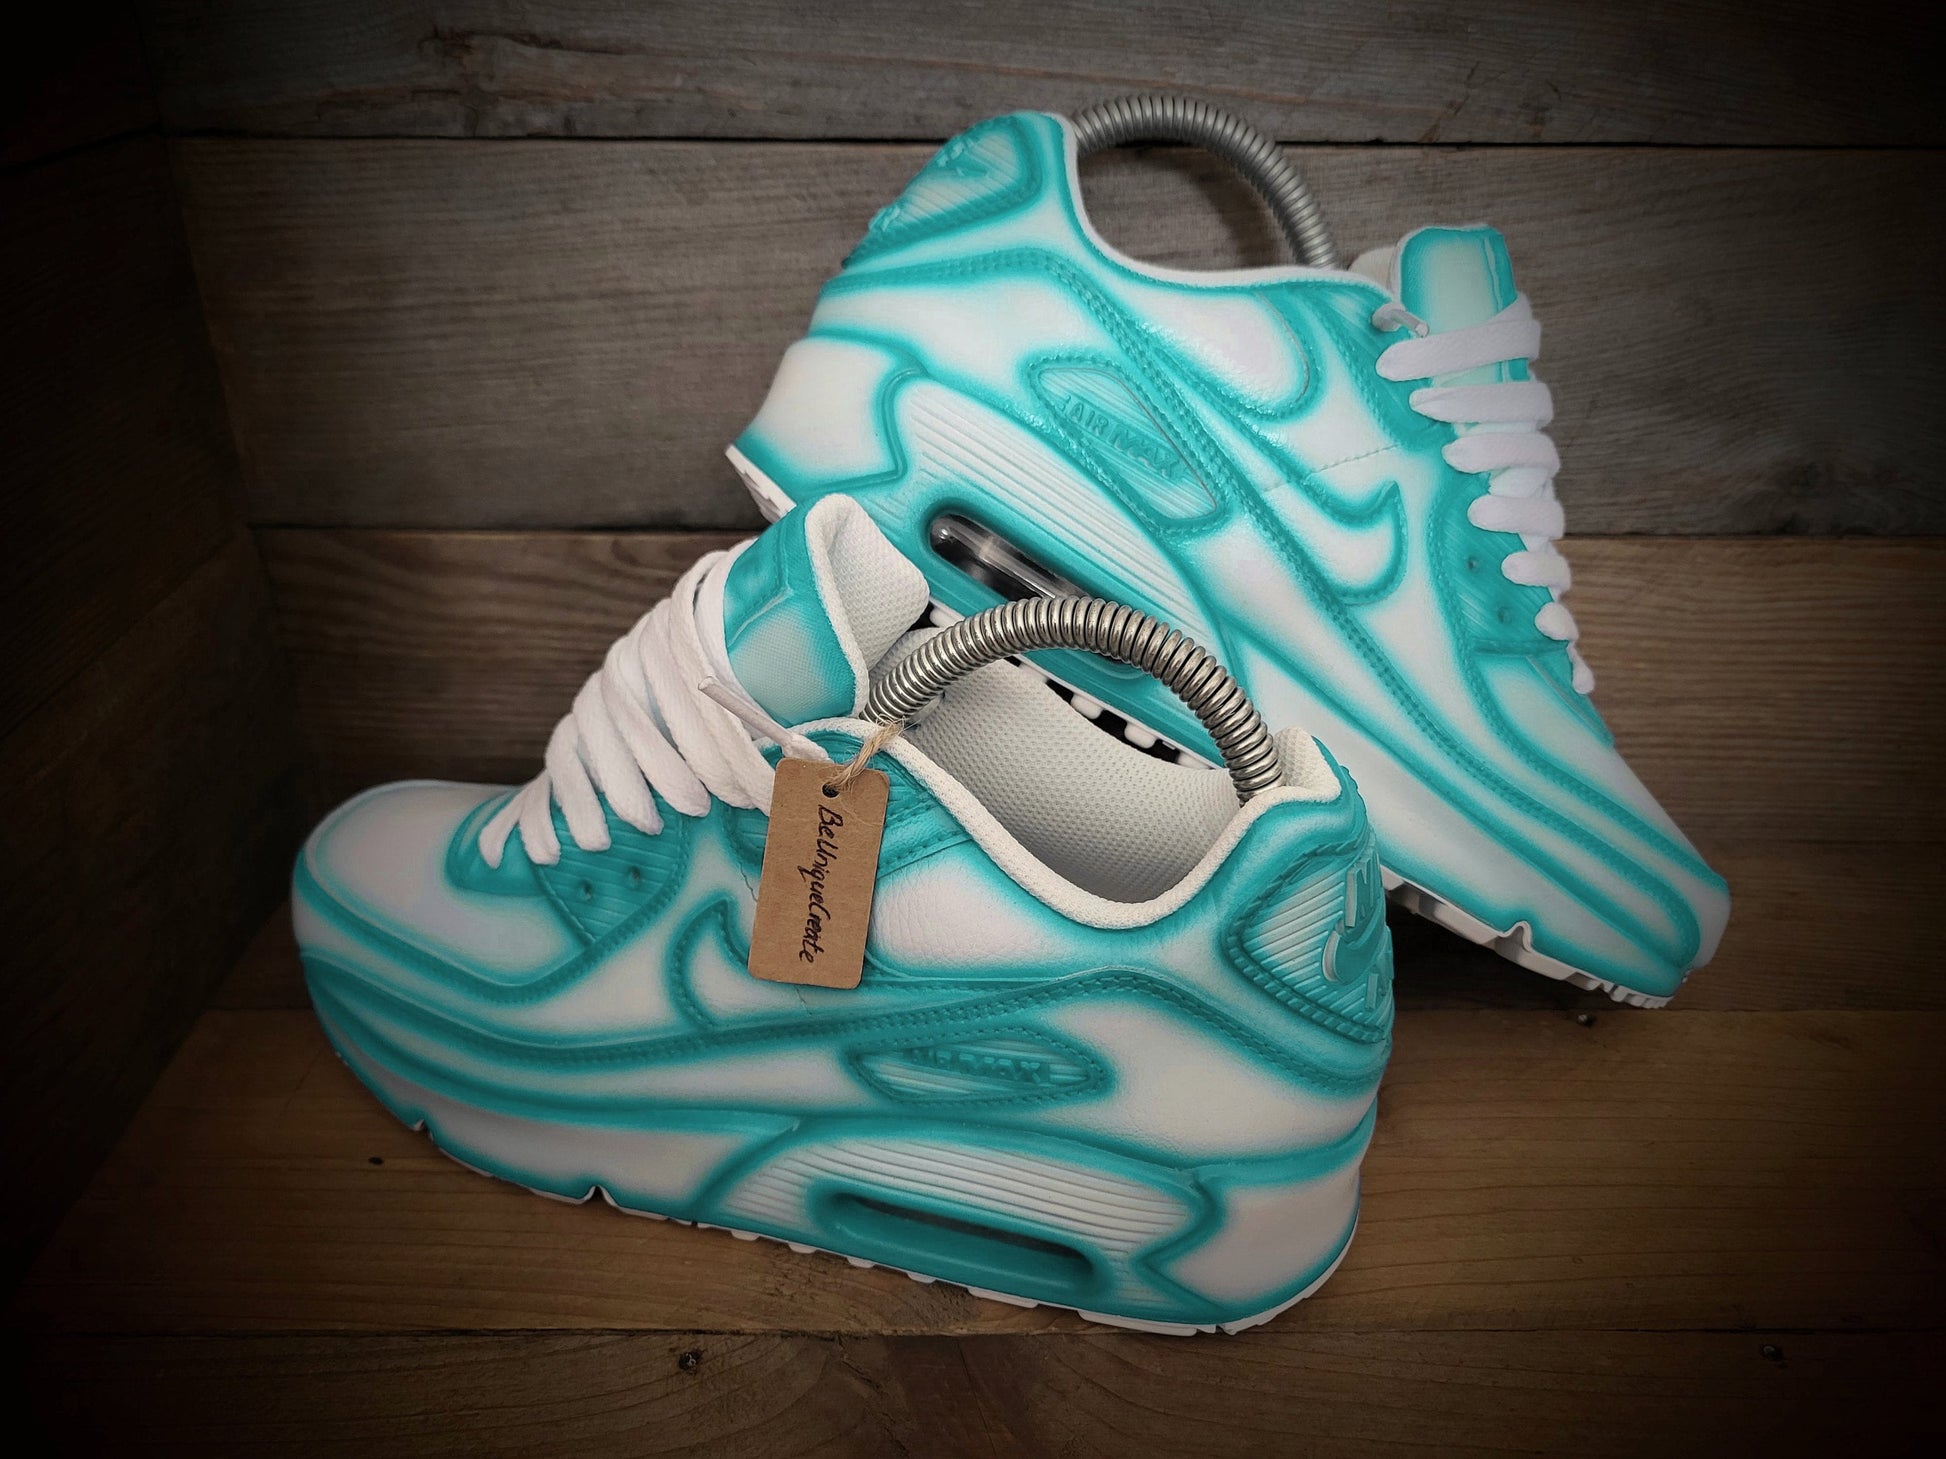 Custom Painted Air Max 90/Sneakers/Shoes/Kicks/Premium/Personalised/Turquoise Cartoon